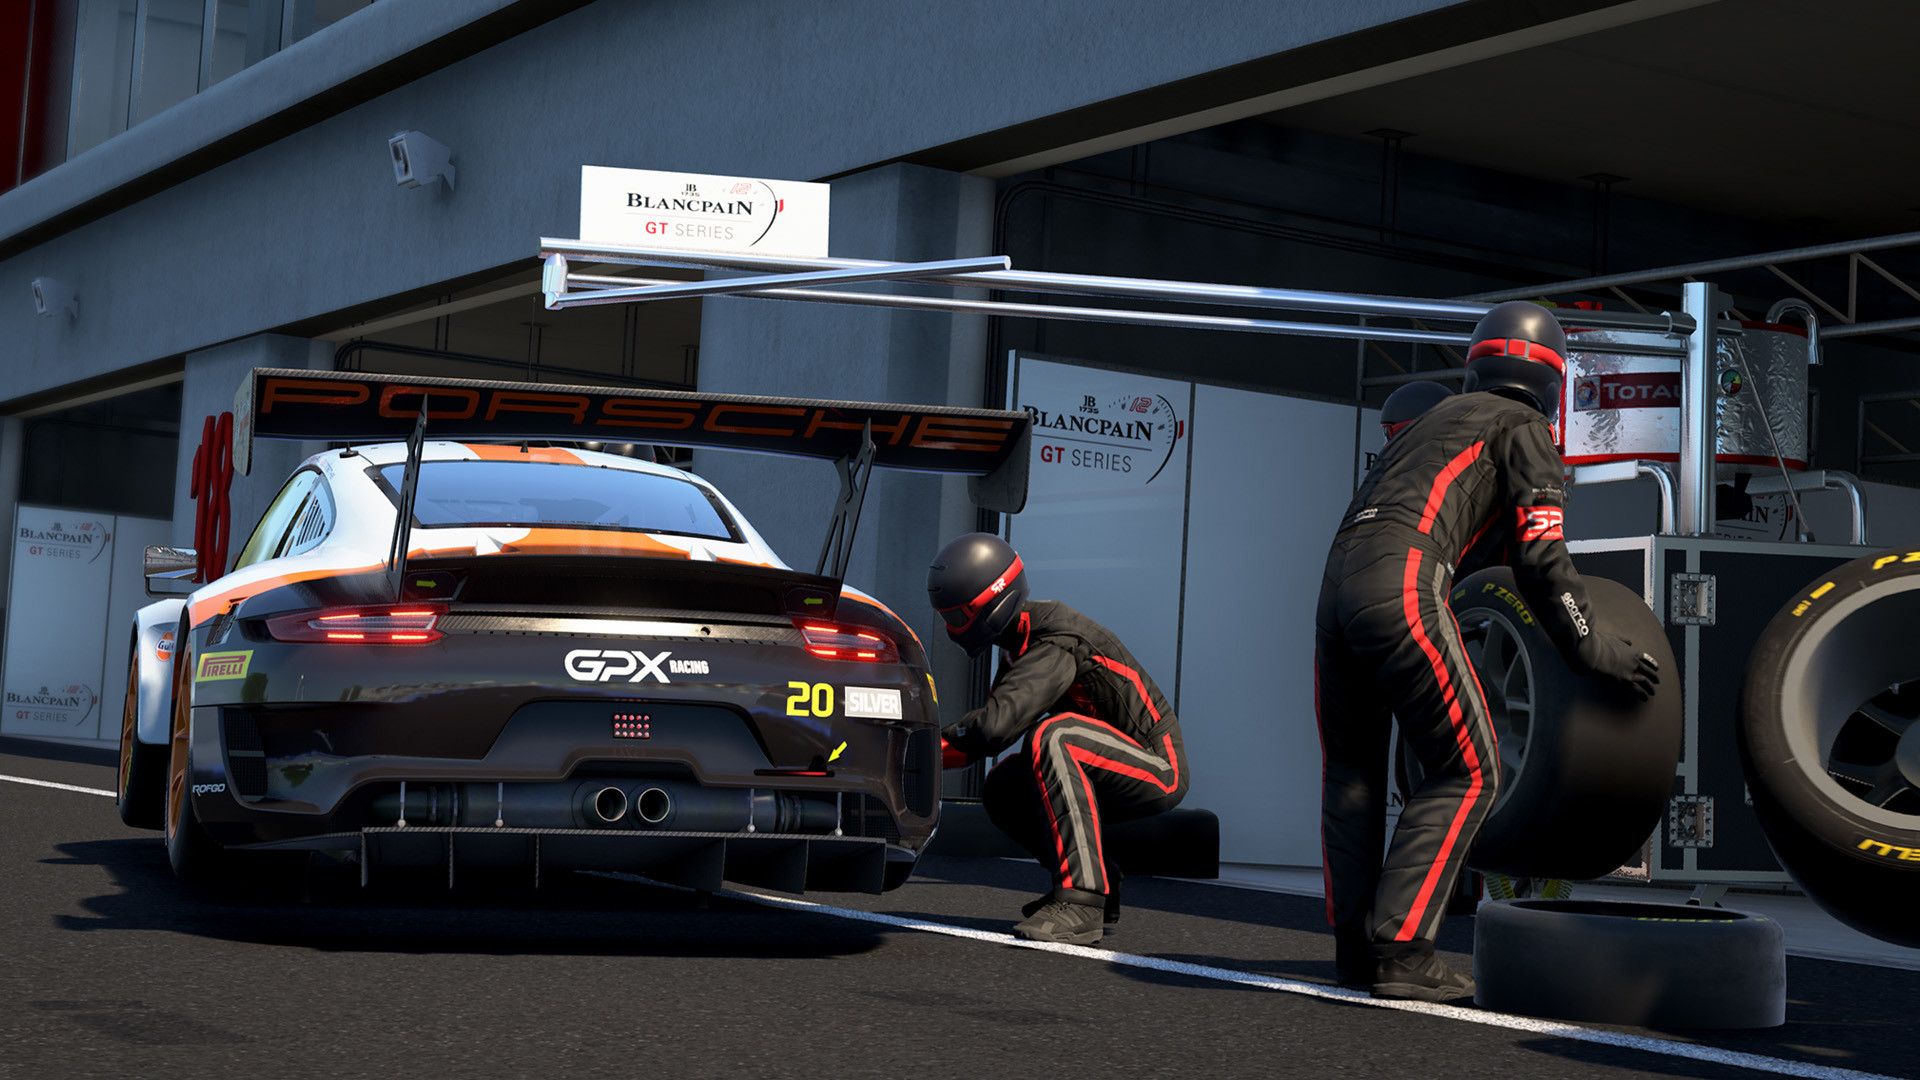 Best simulation games: Assetto Corsa Competizione. Image shows a car under maintenance.